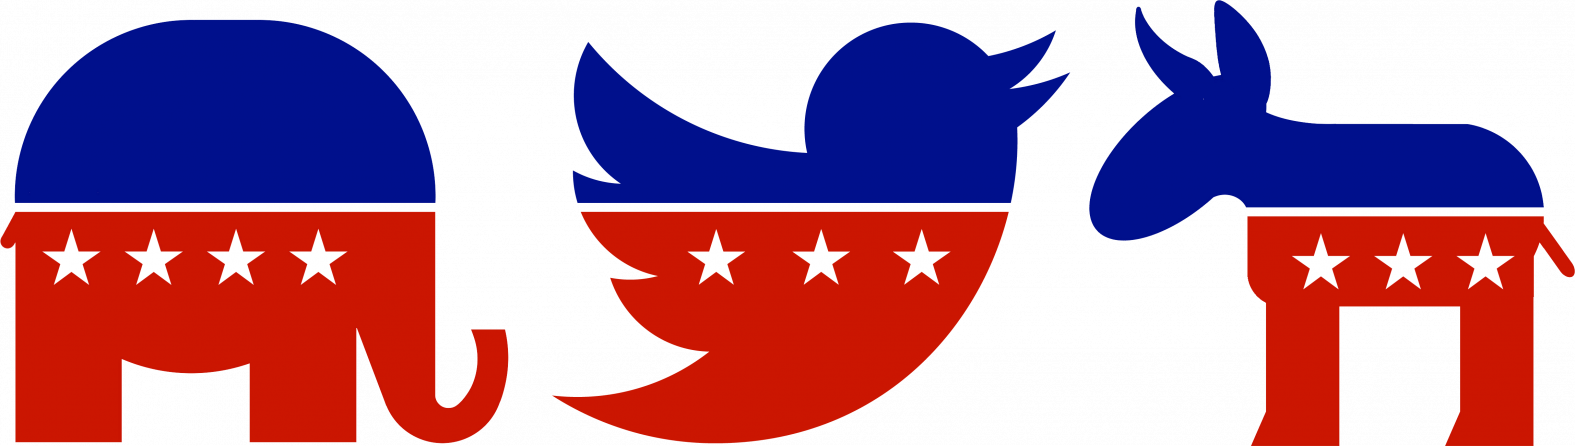 political_twitter_logo.png